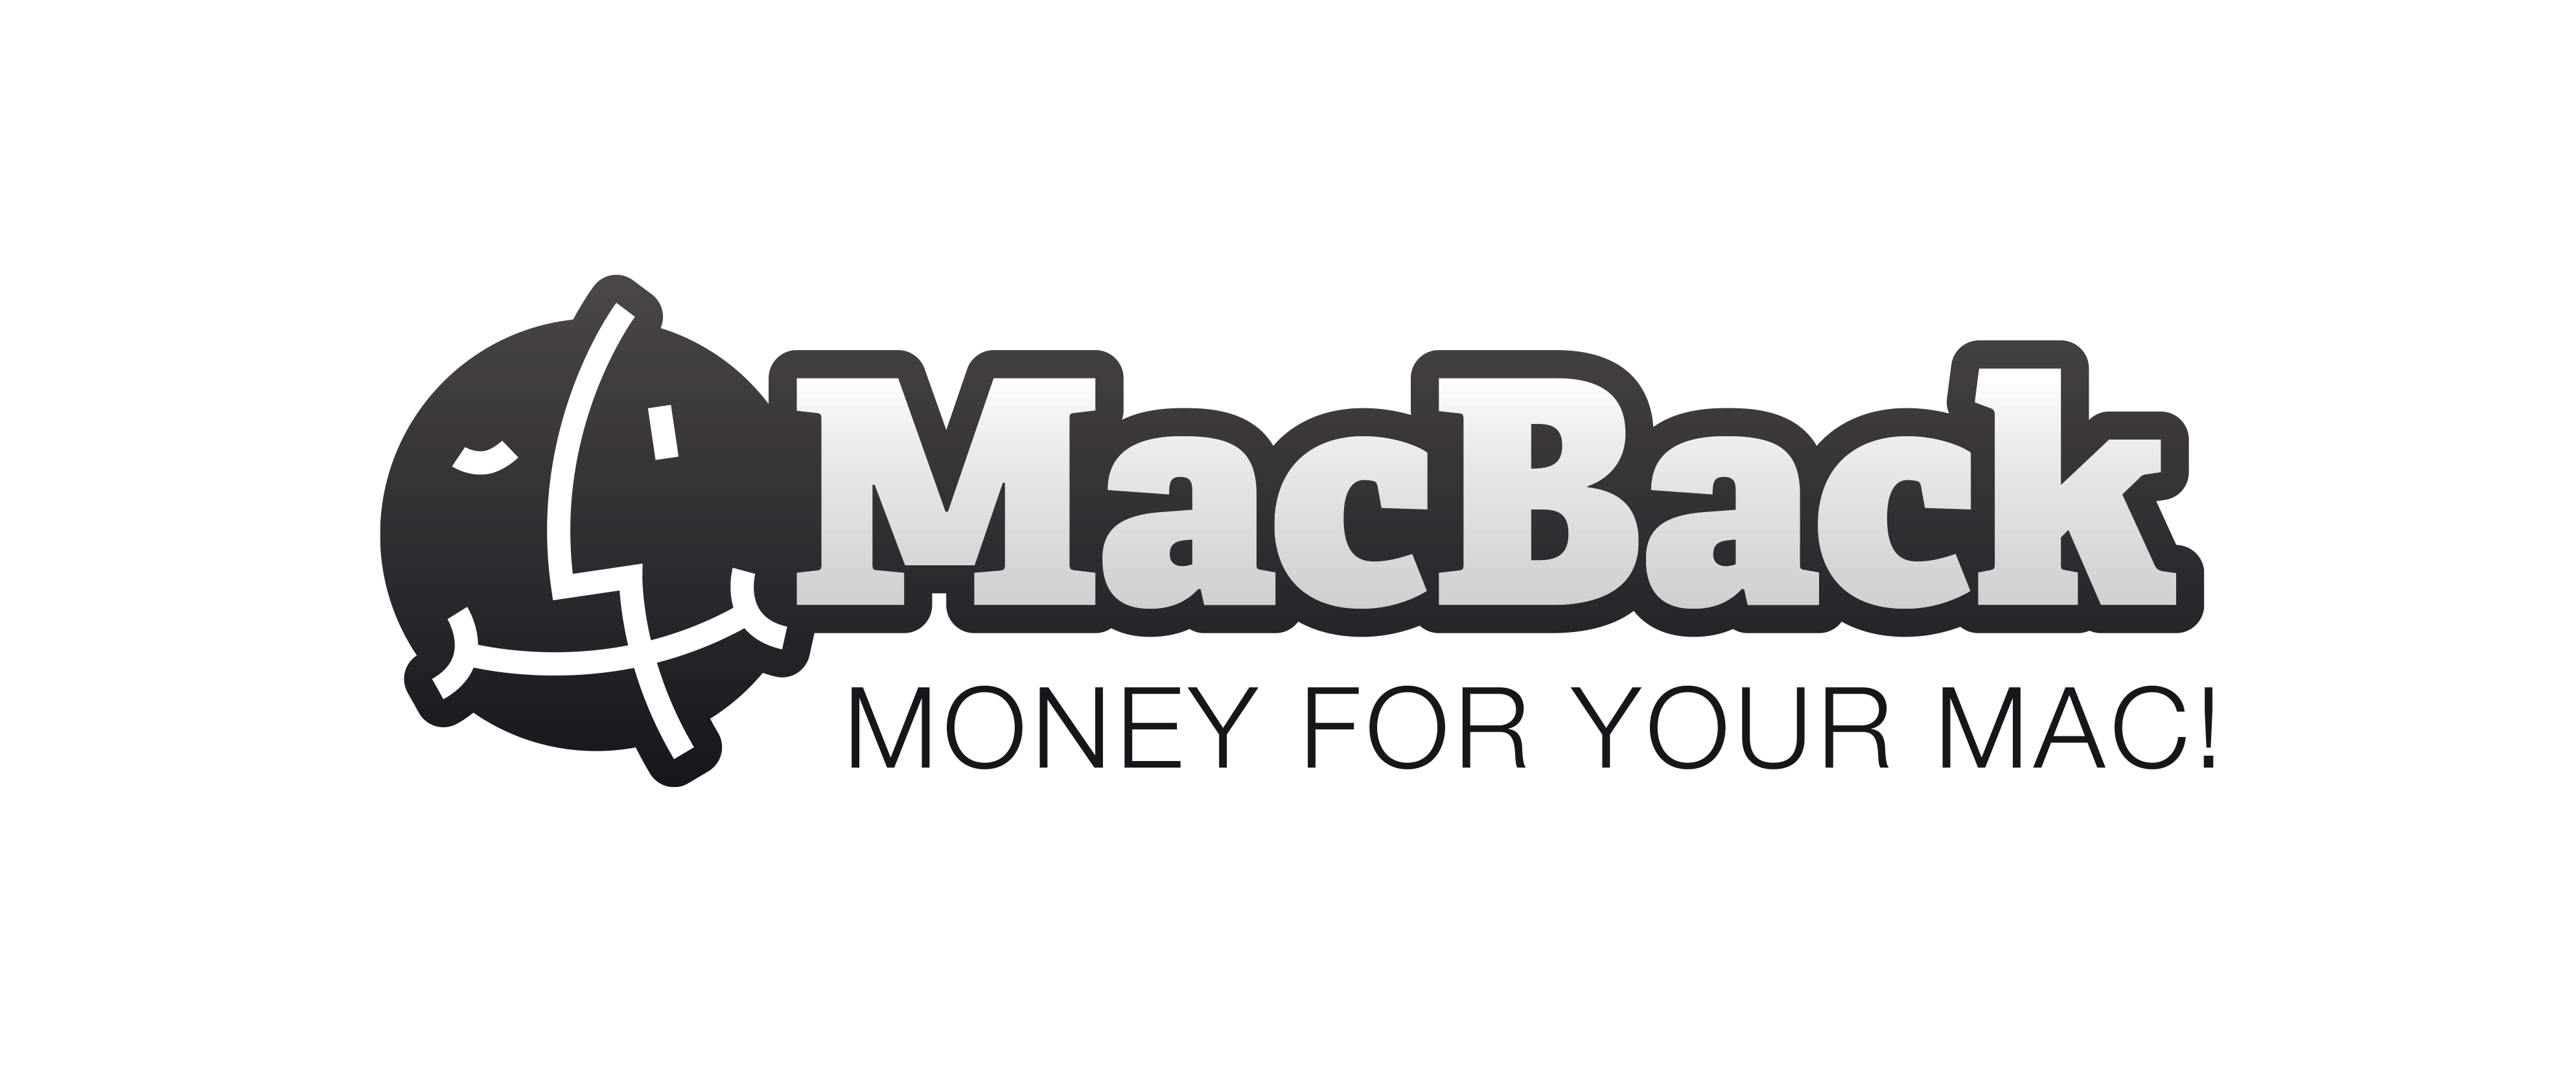 Macback Coupons & Promo Codes